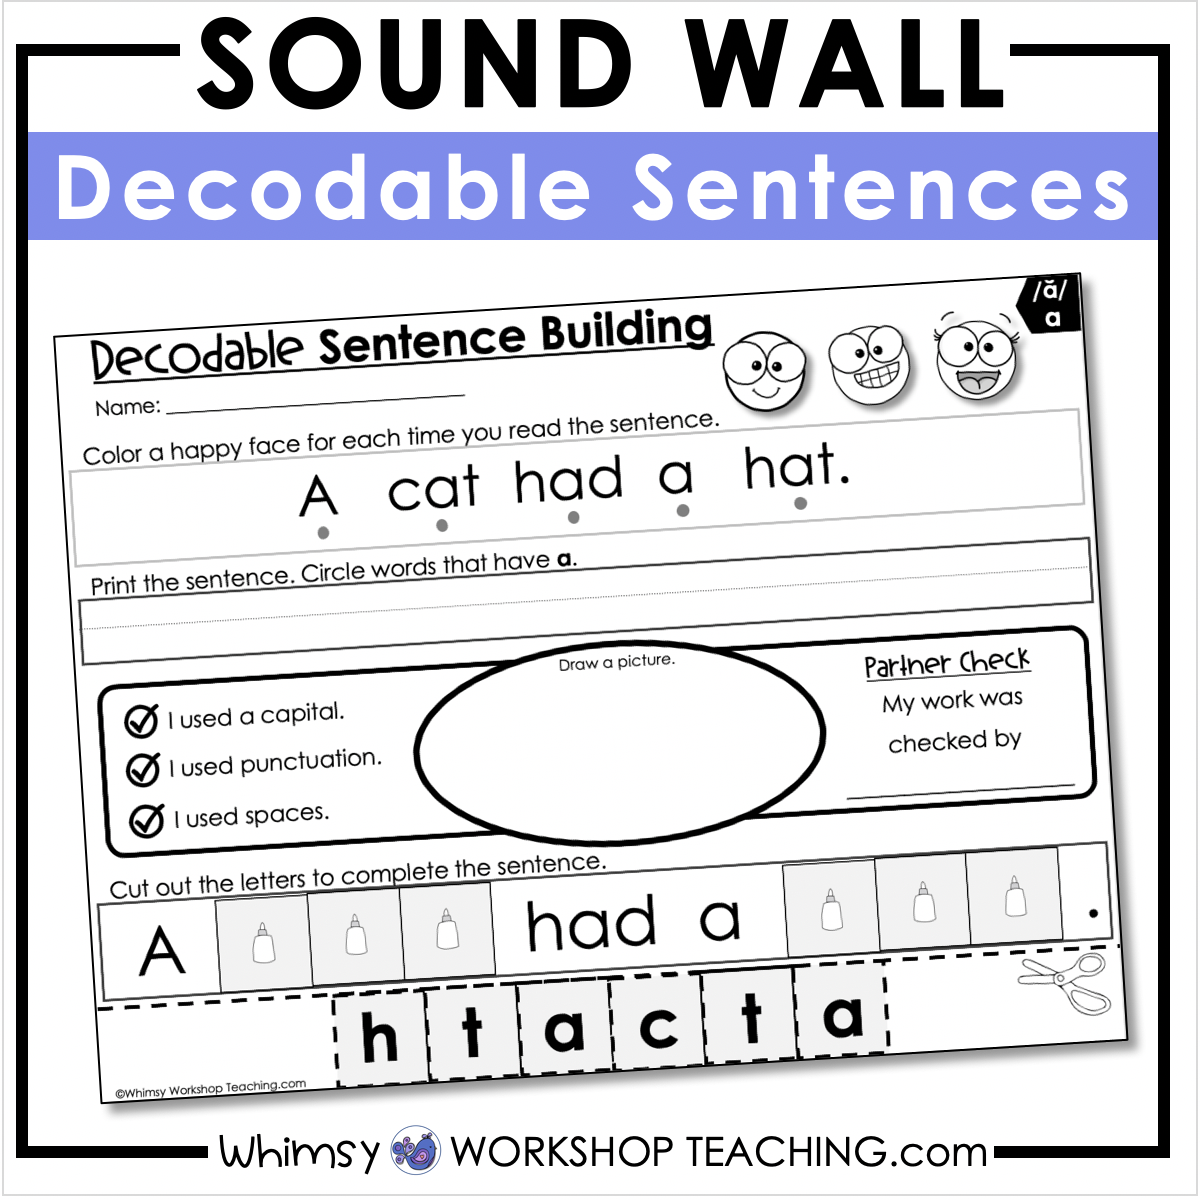 Decodable Sentences Whimsy Workshop Teaching 